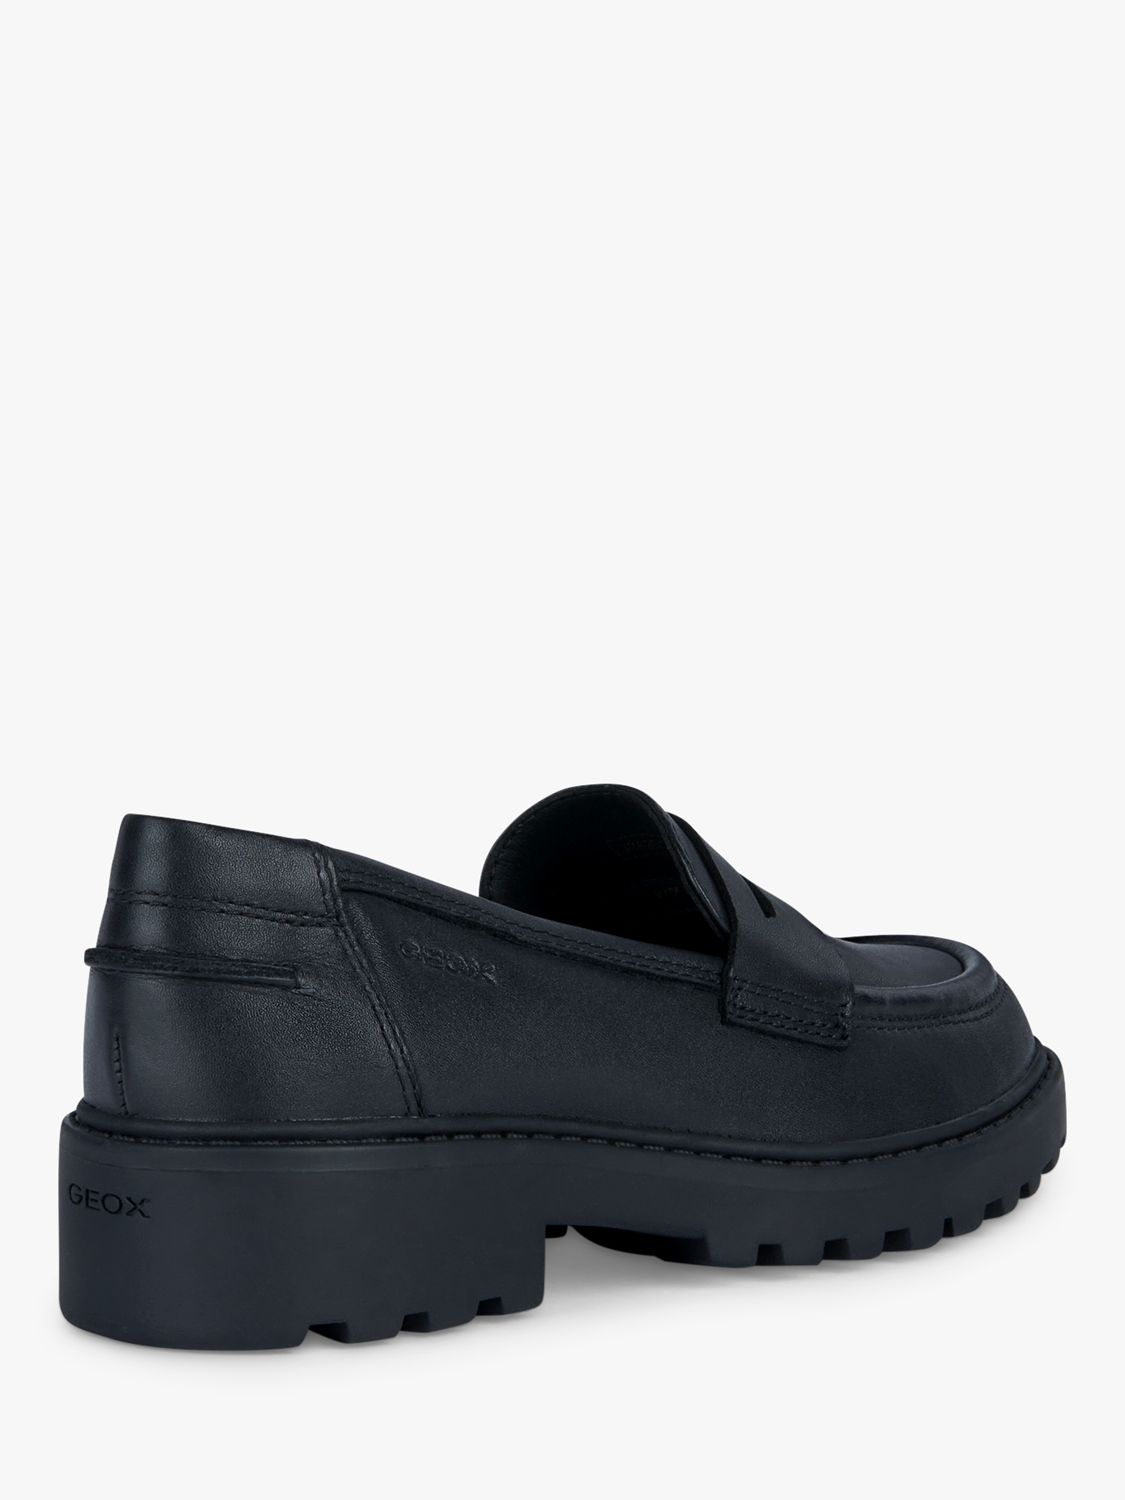 Buy Geox Kids' Casey Slip On Leather Loafer School Shoes, Black Online at johnlewis.com